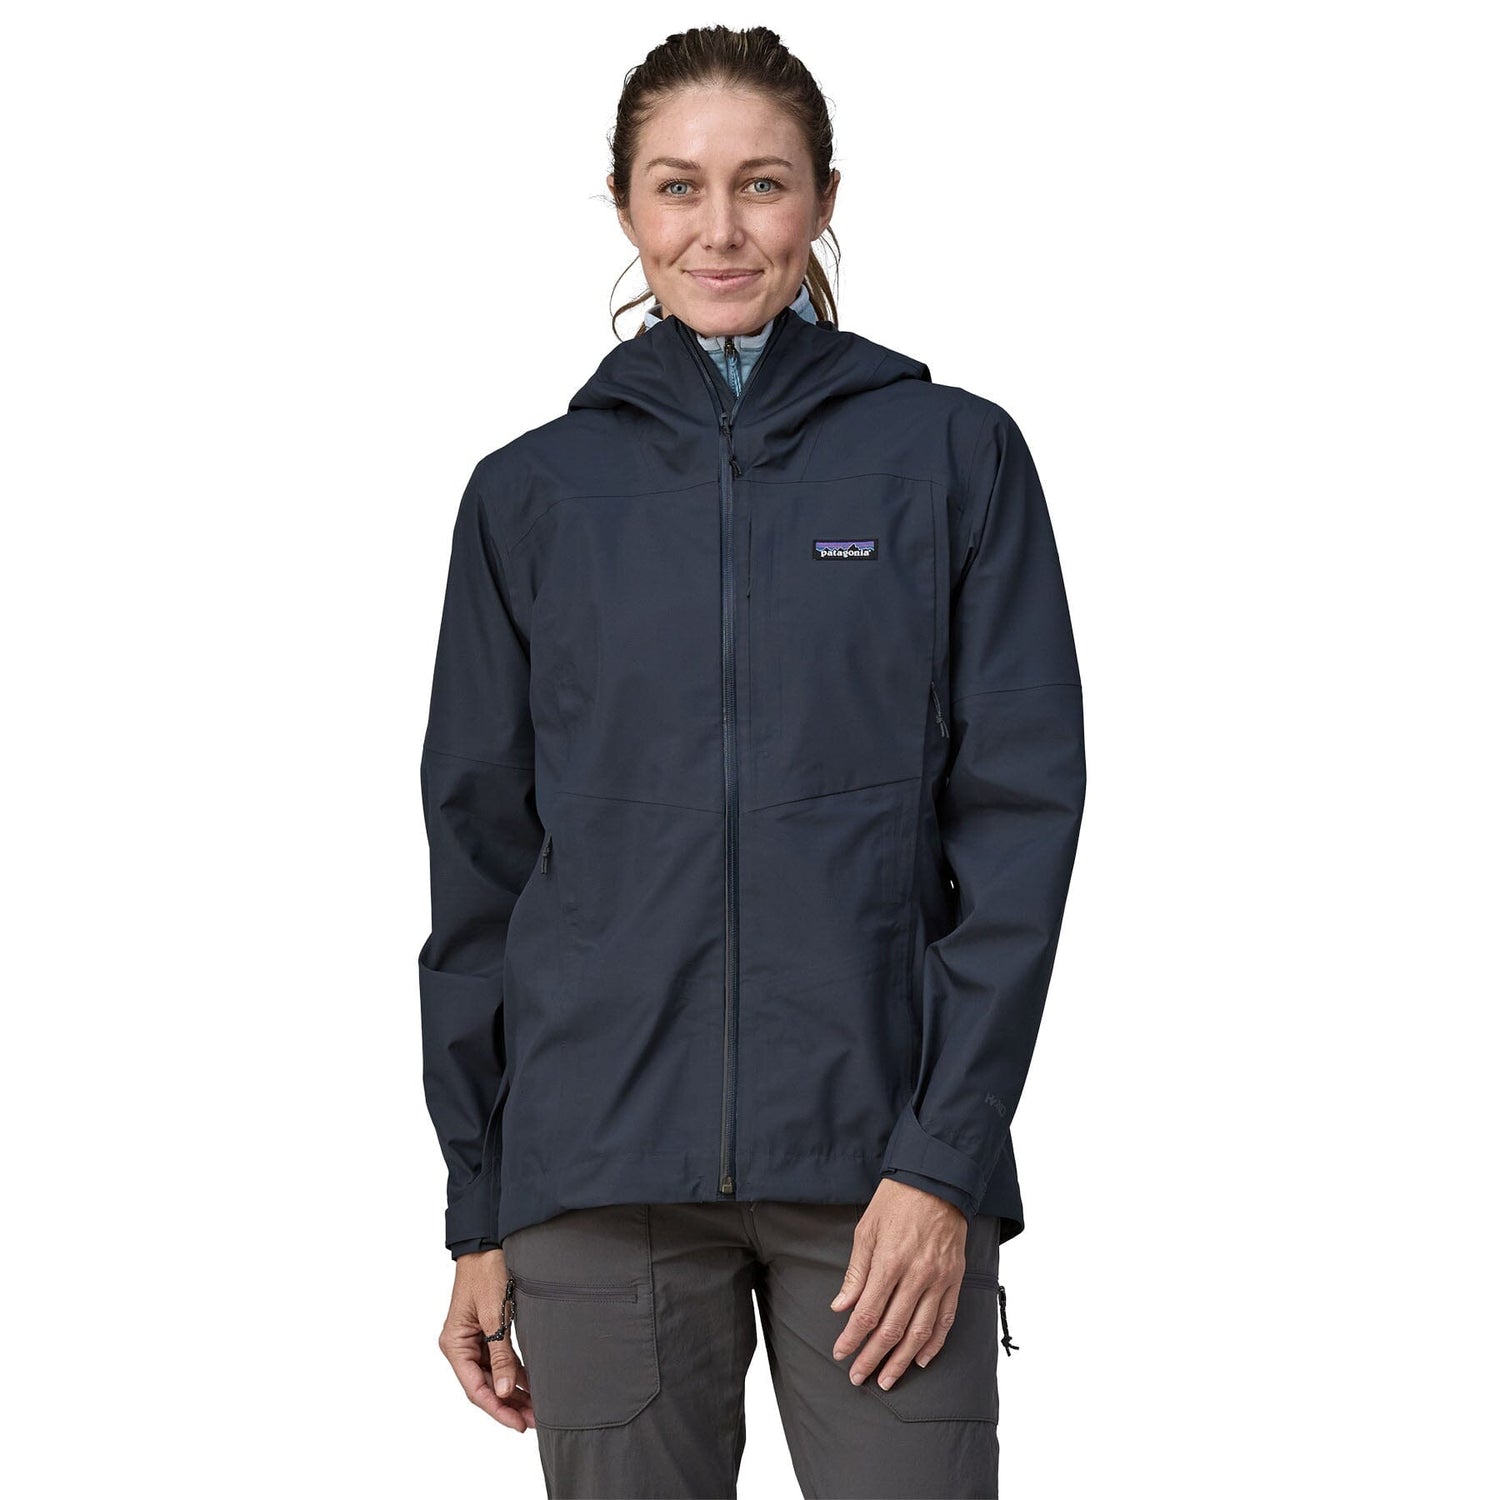 Patagonia W's Boulder Fork Rain Jacket - Recycled polyester Smolder Blue Jacket